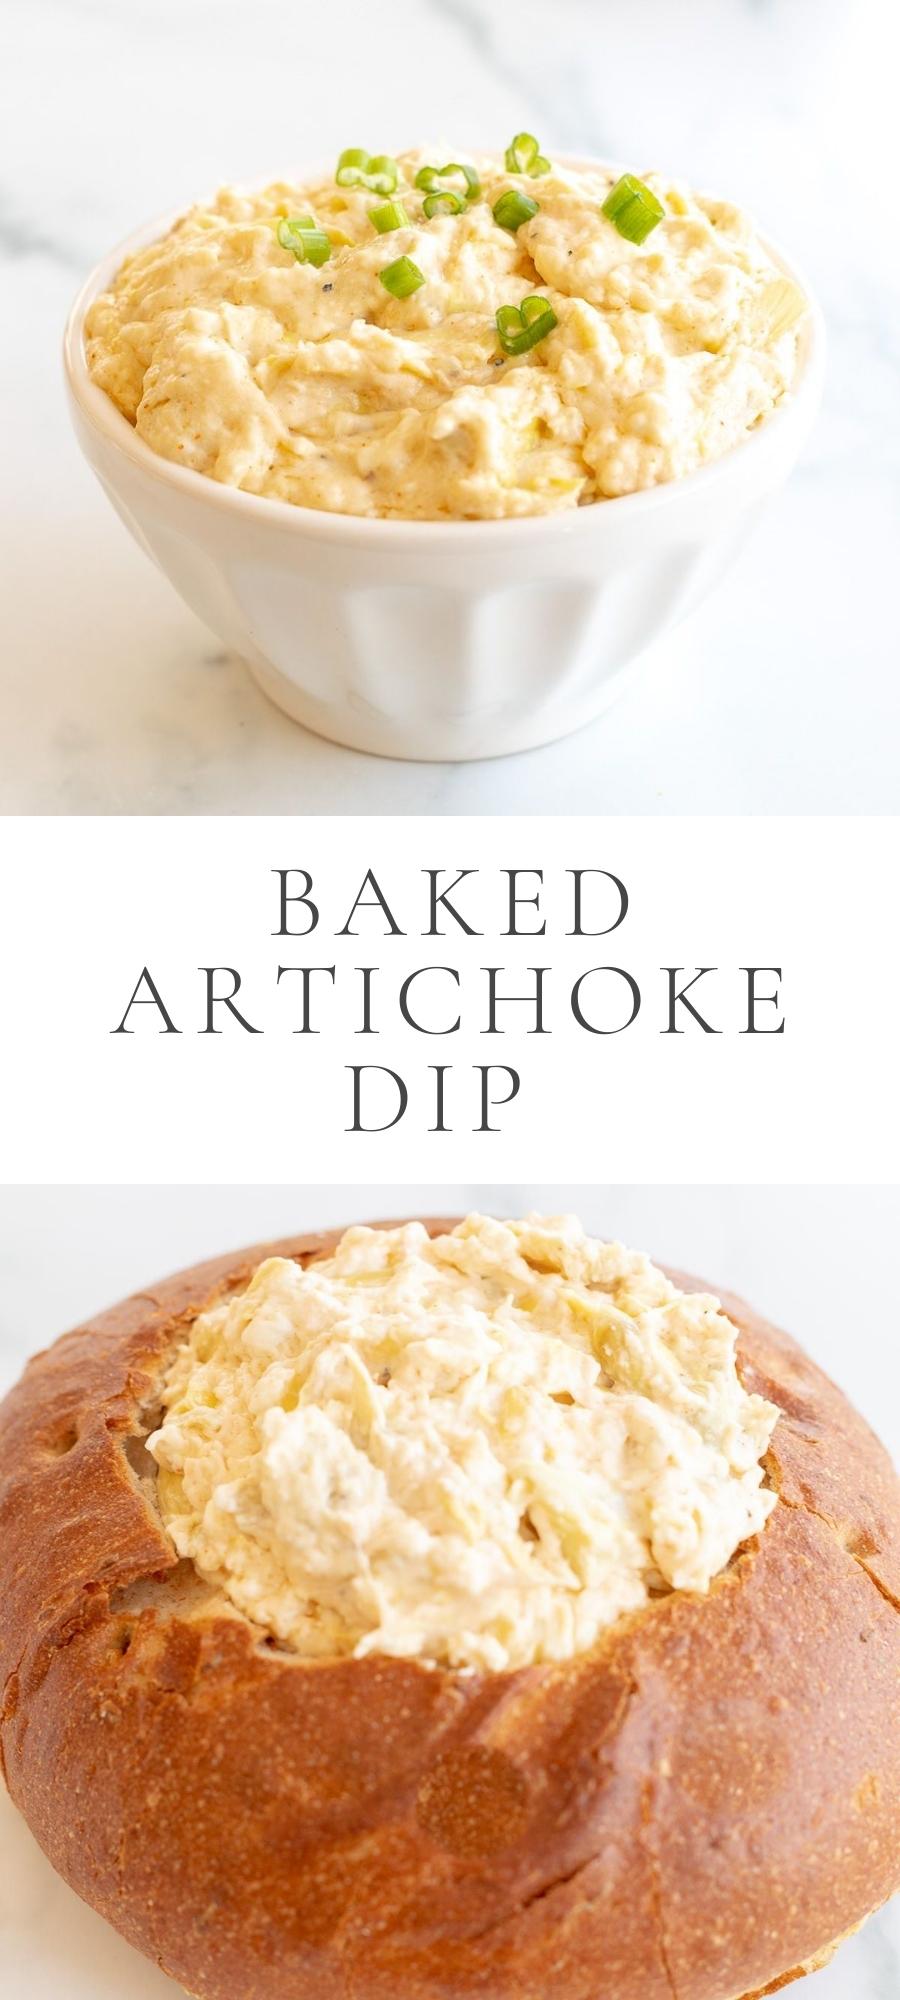 artichoke dip in bowl and bread